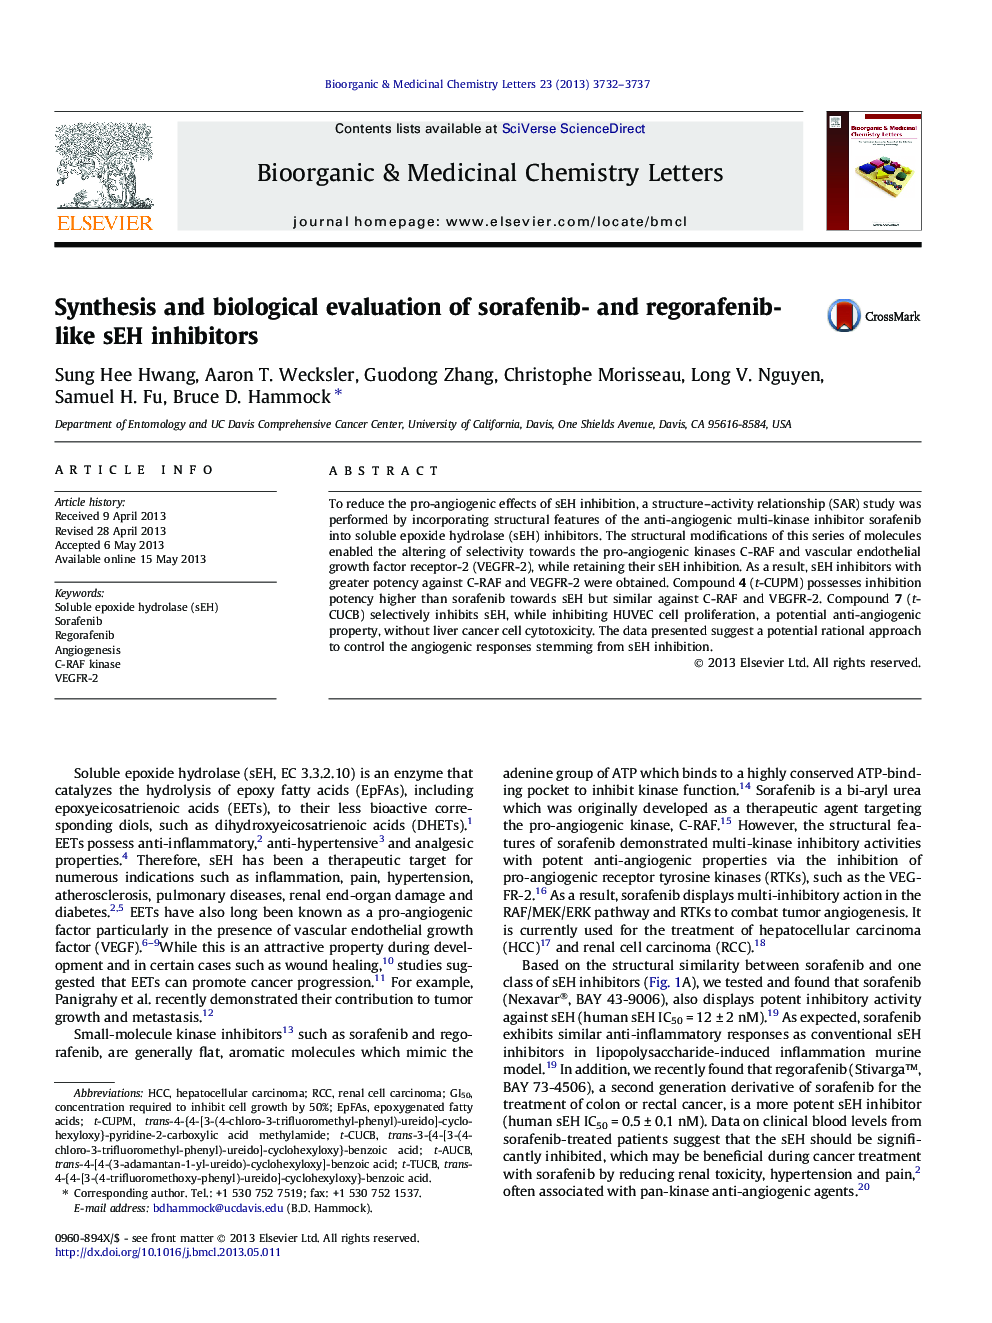 Synthesis and biological evaluation of sorafenib- and regorafenib-like sEH inhibitors